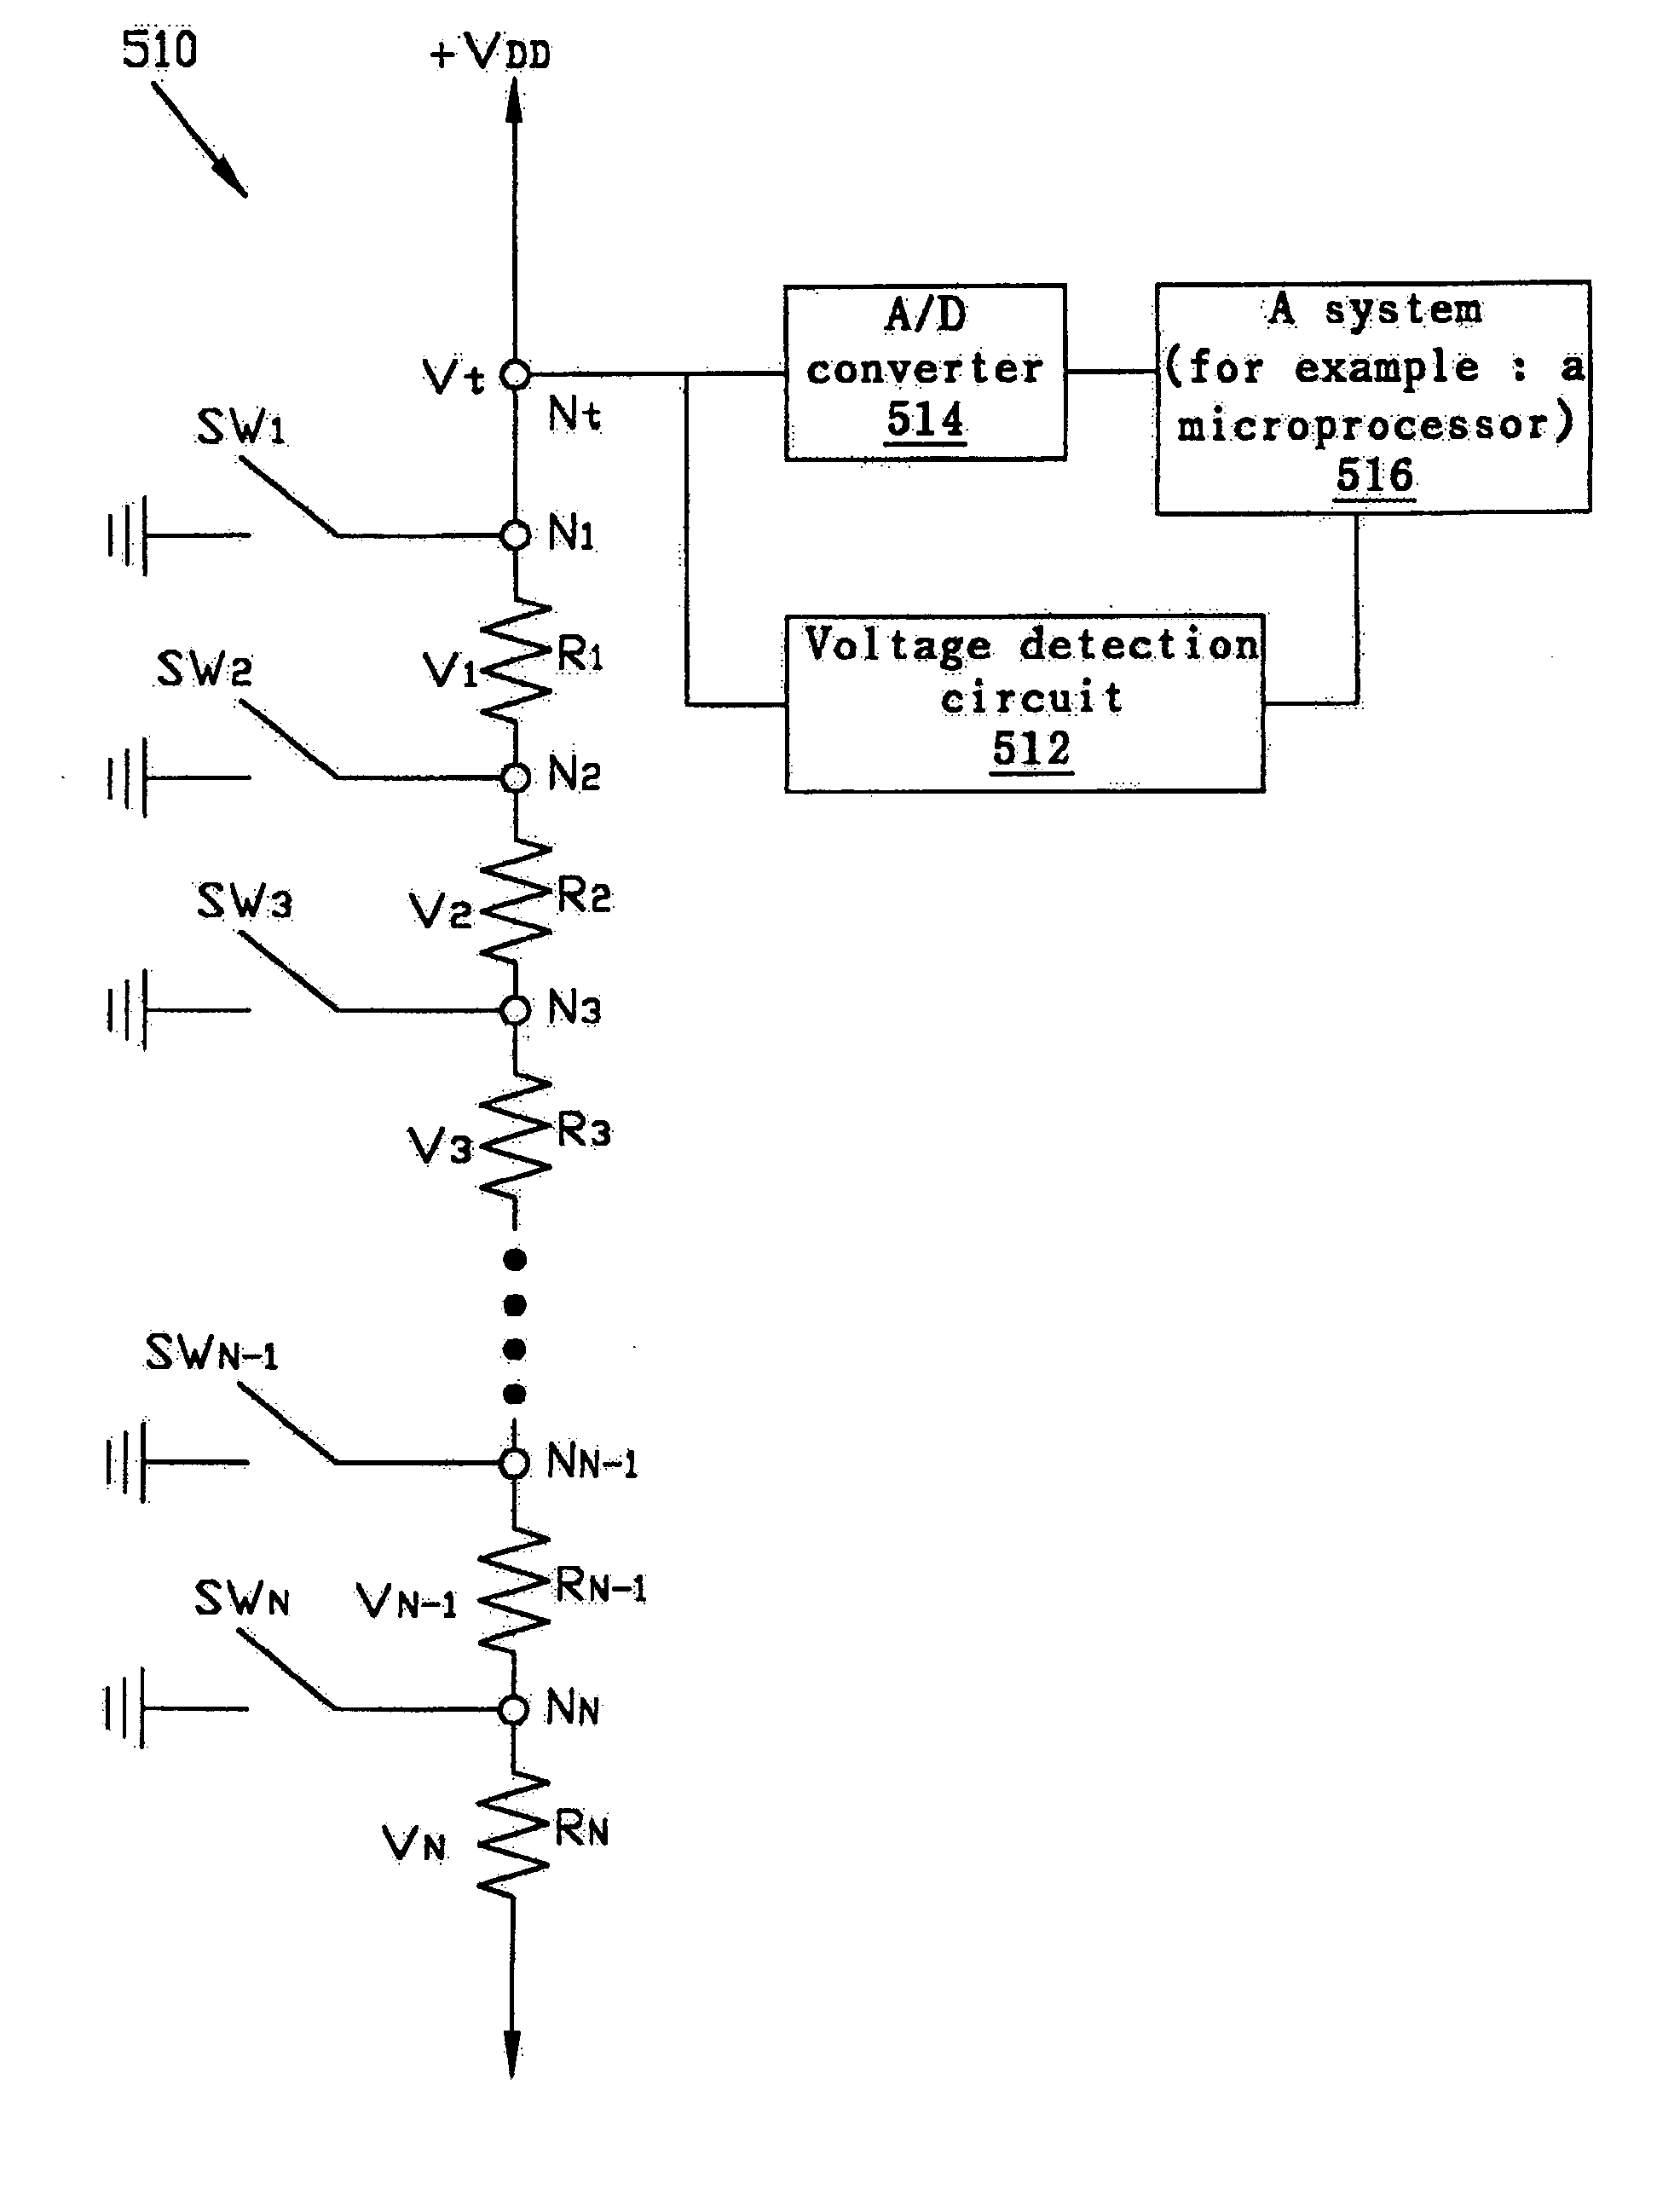 Apparatus and method of interruptible analog input